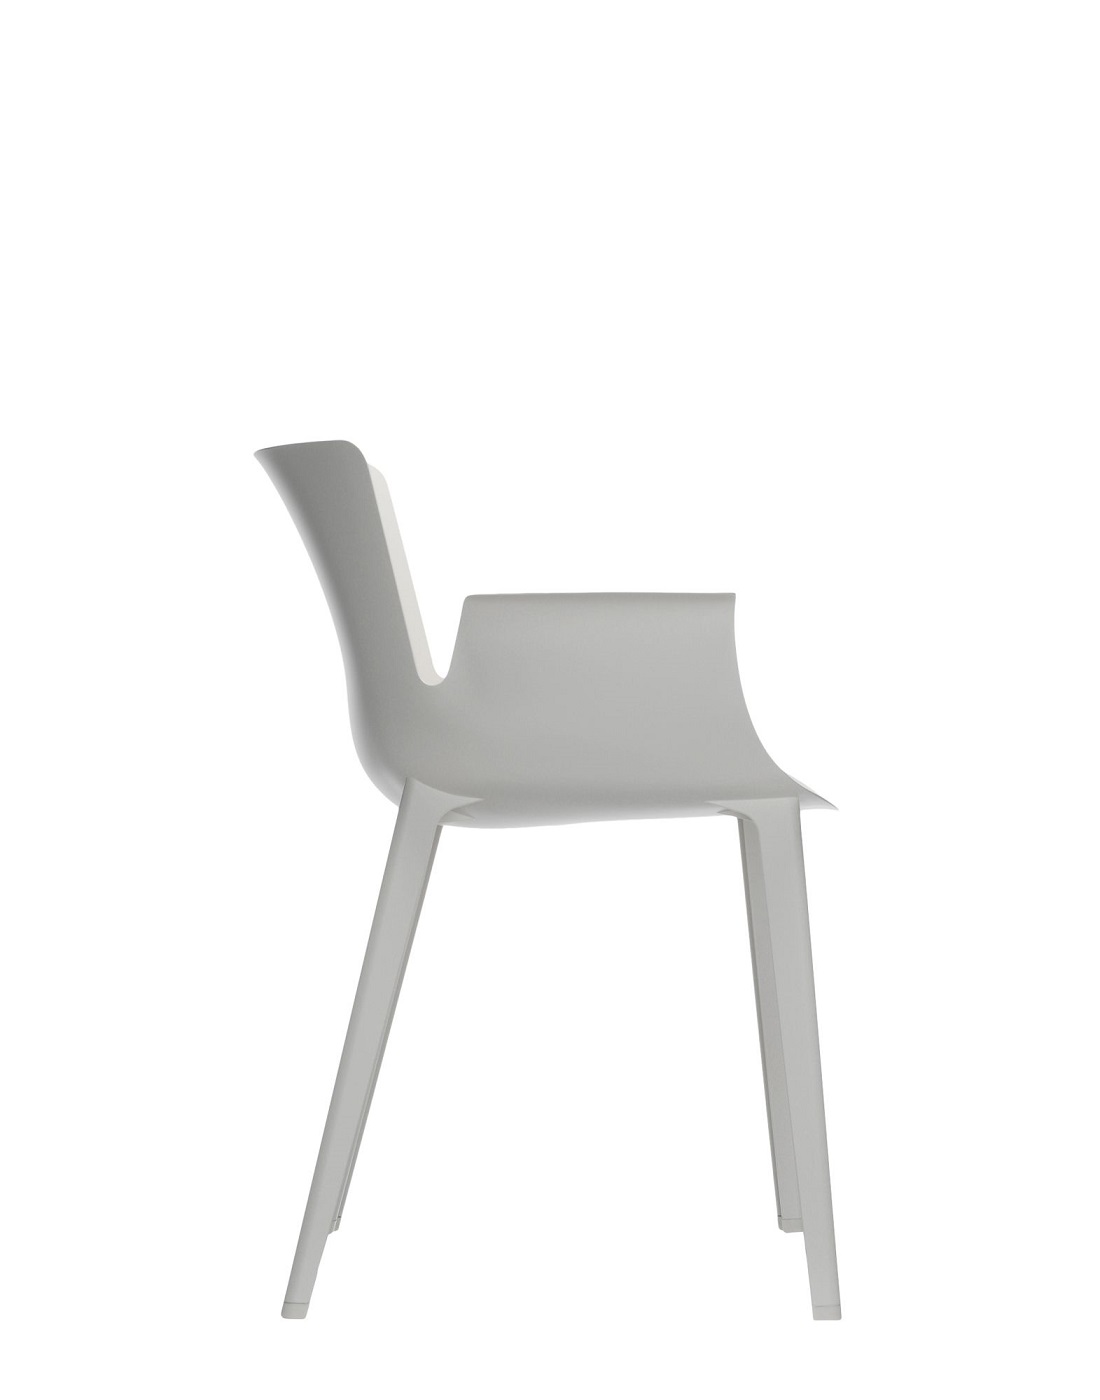 chair-piuma-philippe-starck-B03-side